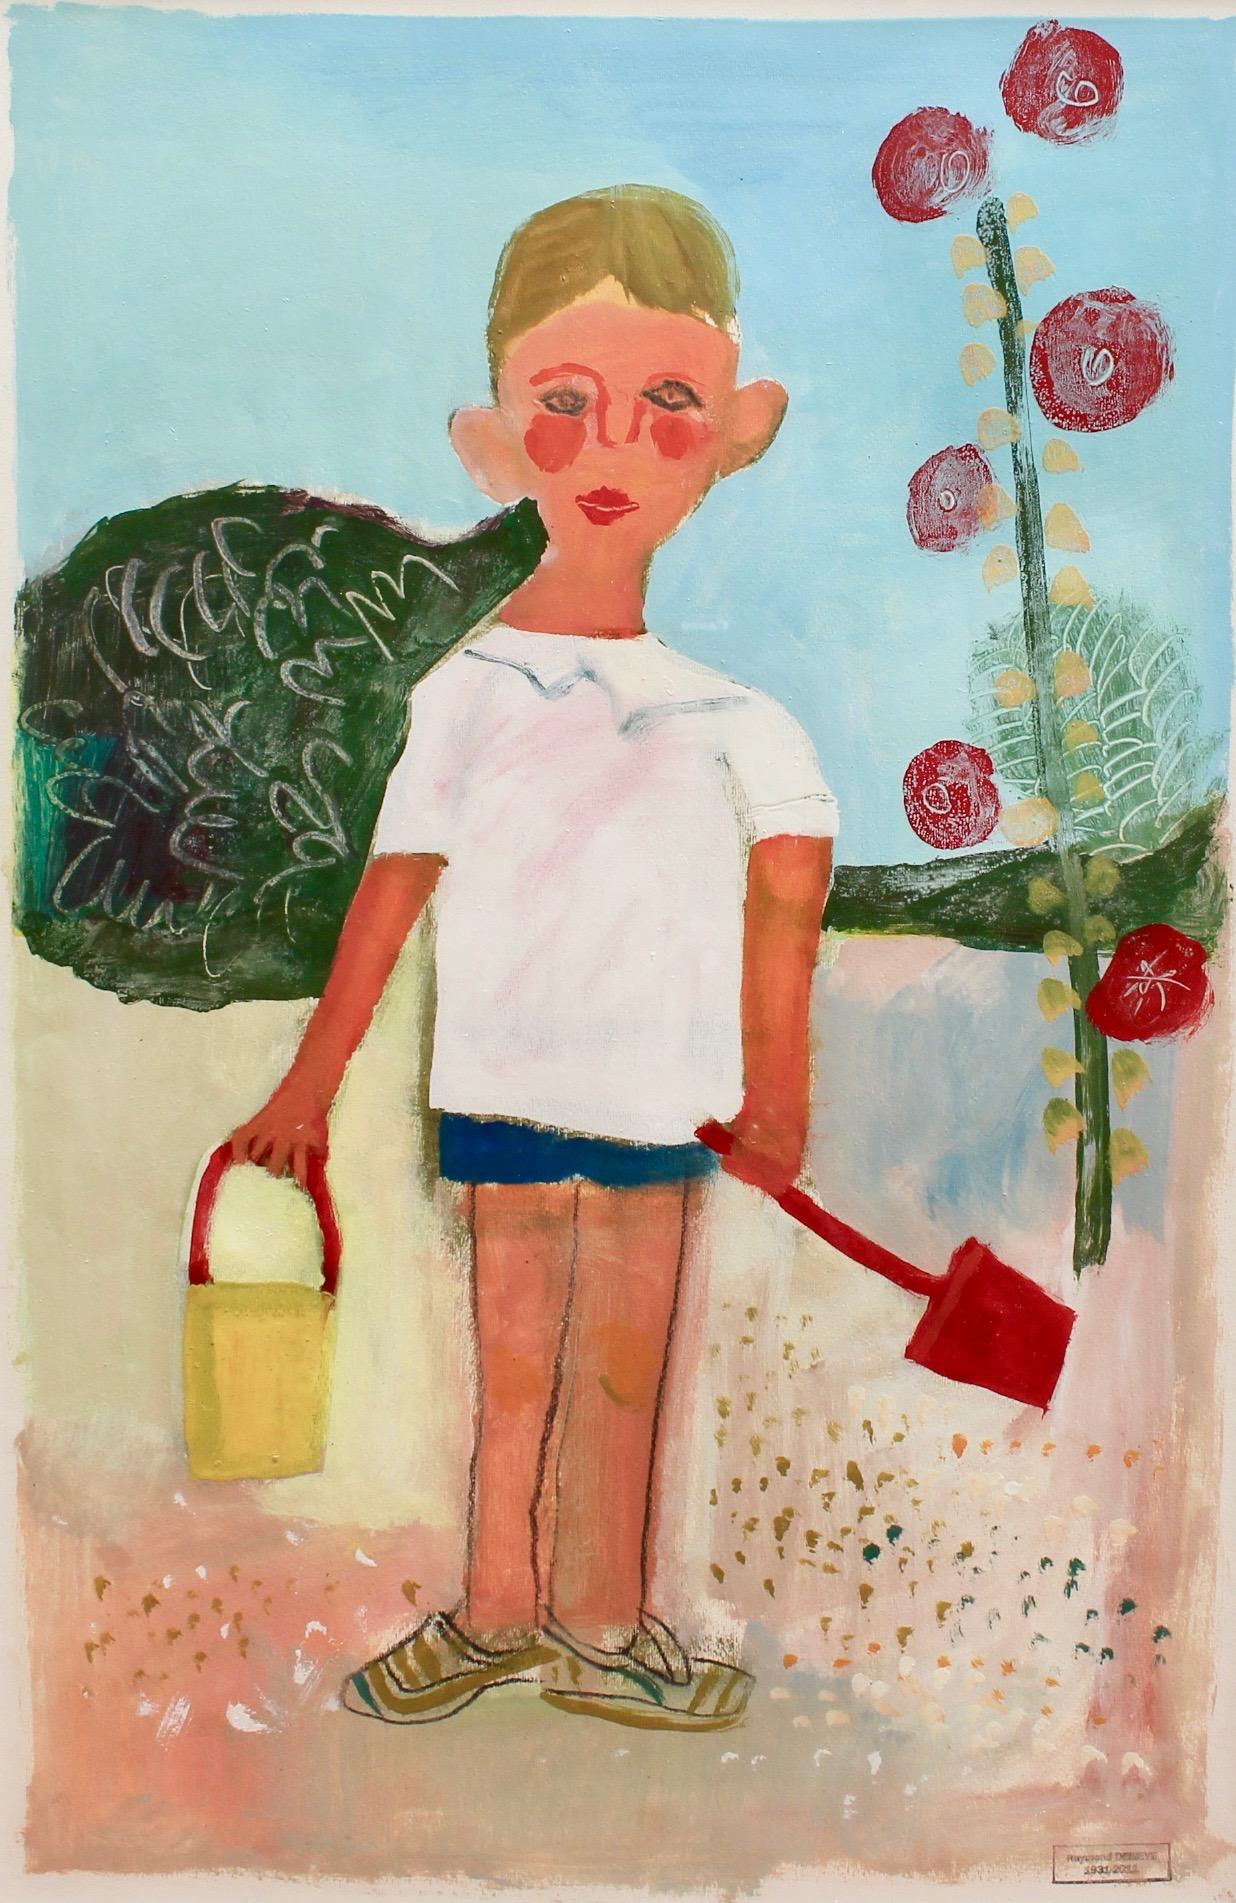 Raymond Debieve Portrait Painting - Portrait of Boy with Pail and Shovel